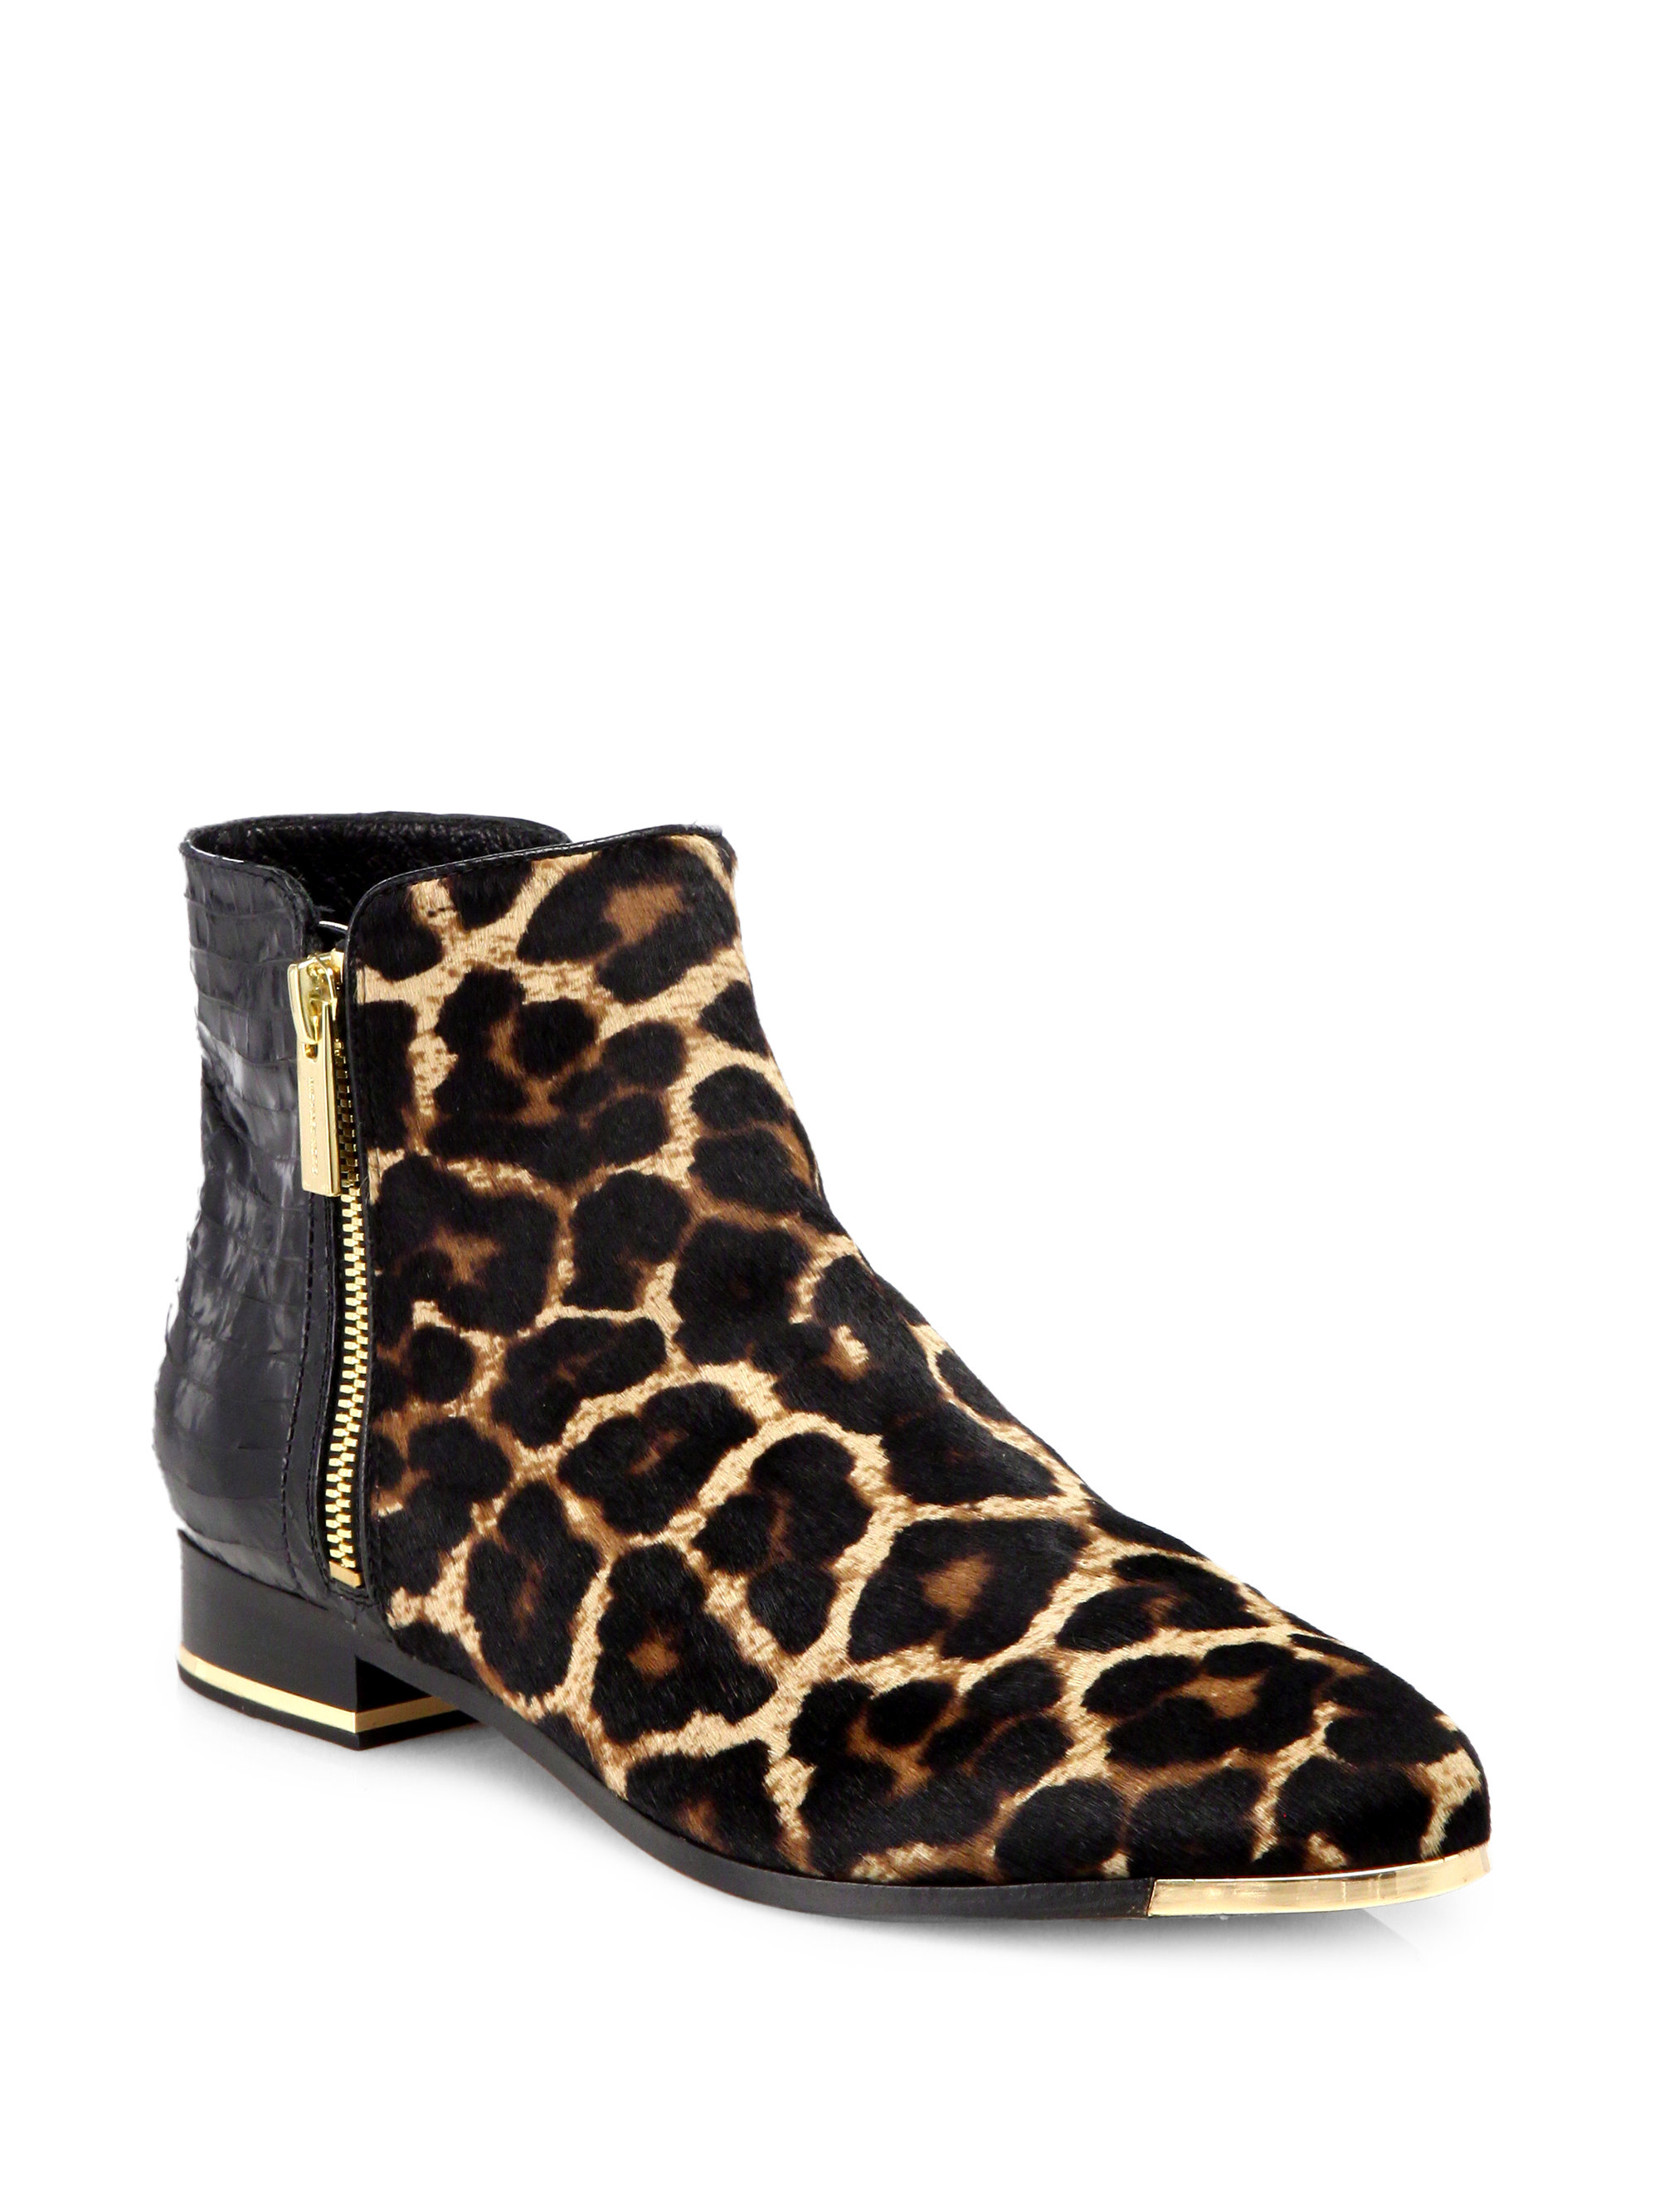 Lyst - Michael Kors Cindra Leopard-print Calf Hair Snake-skin Chelsea Boots